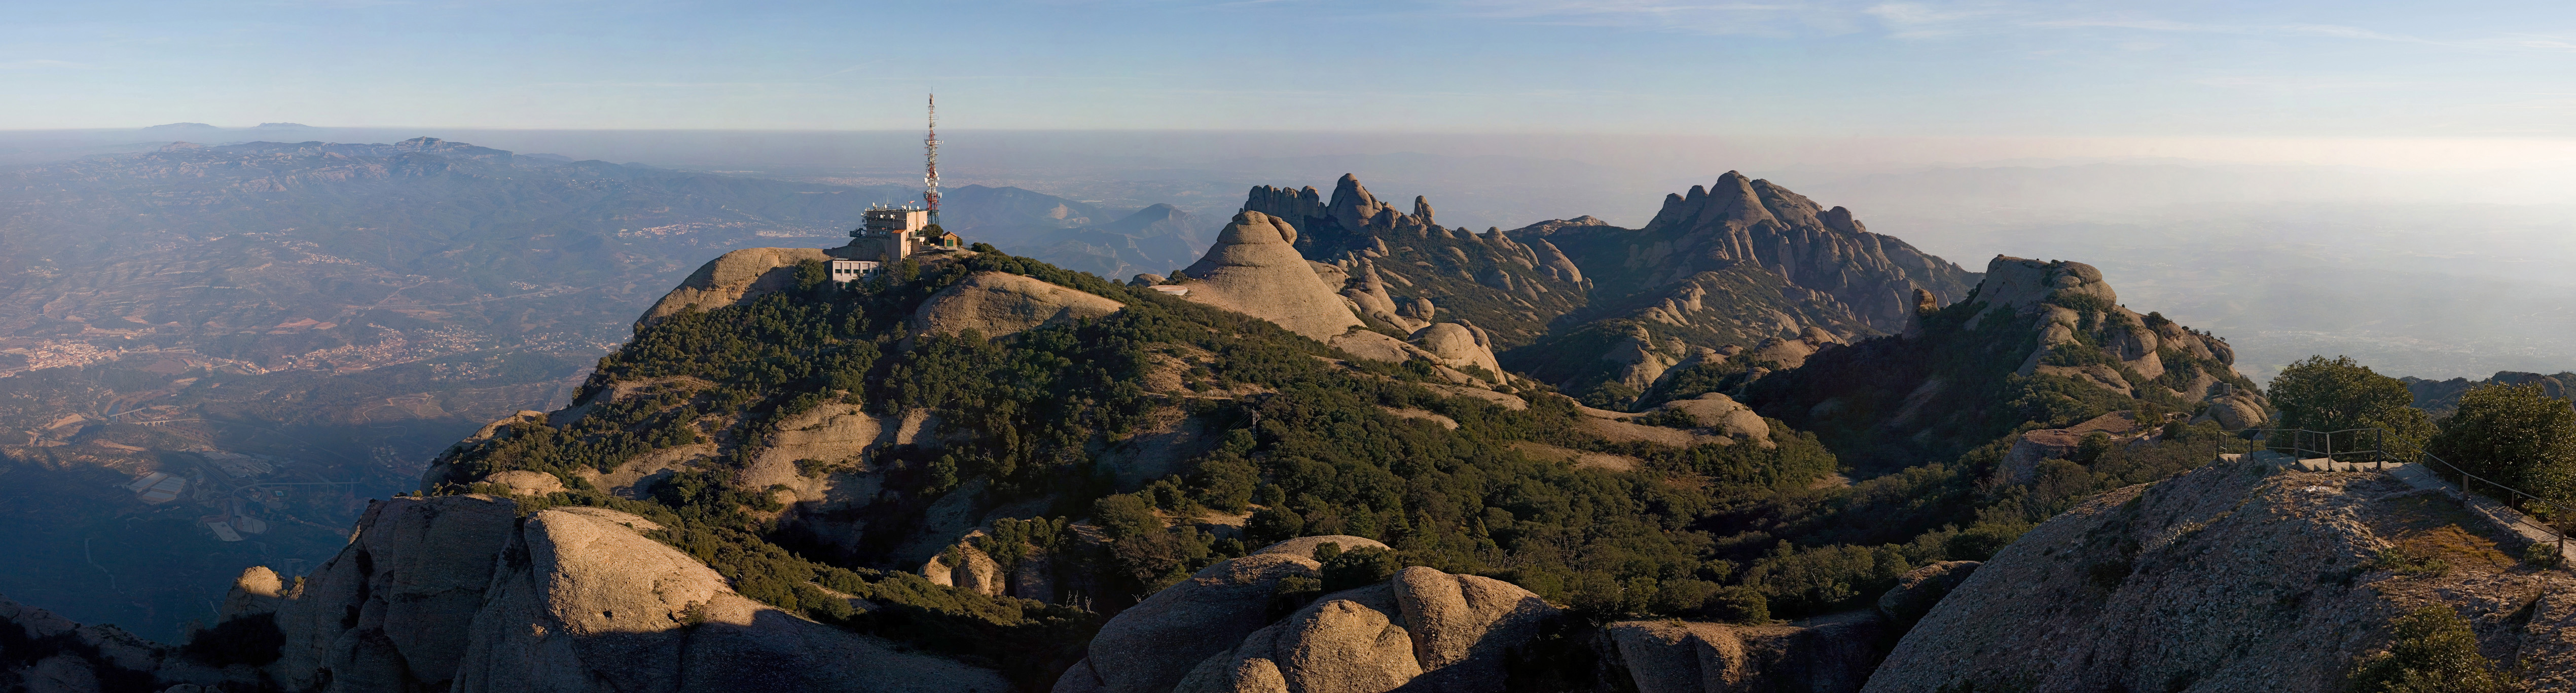 Montserrat (mountain) - Wikipedia